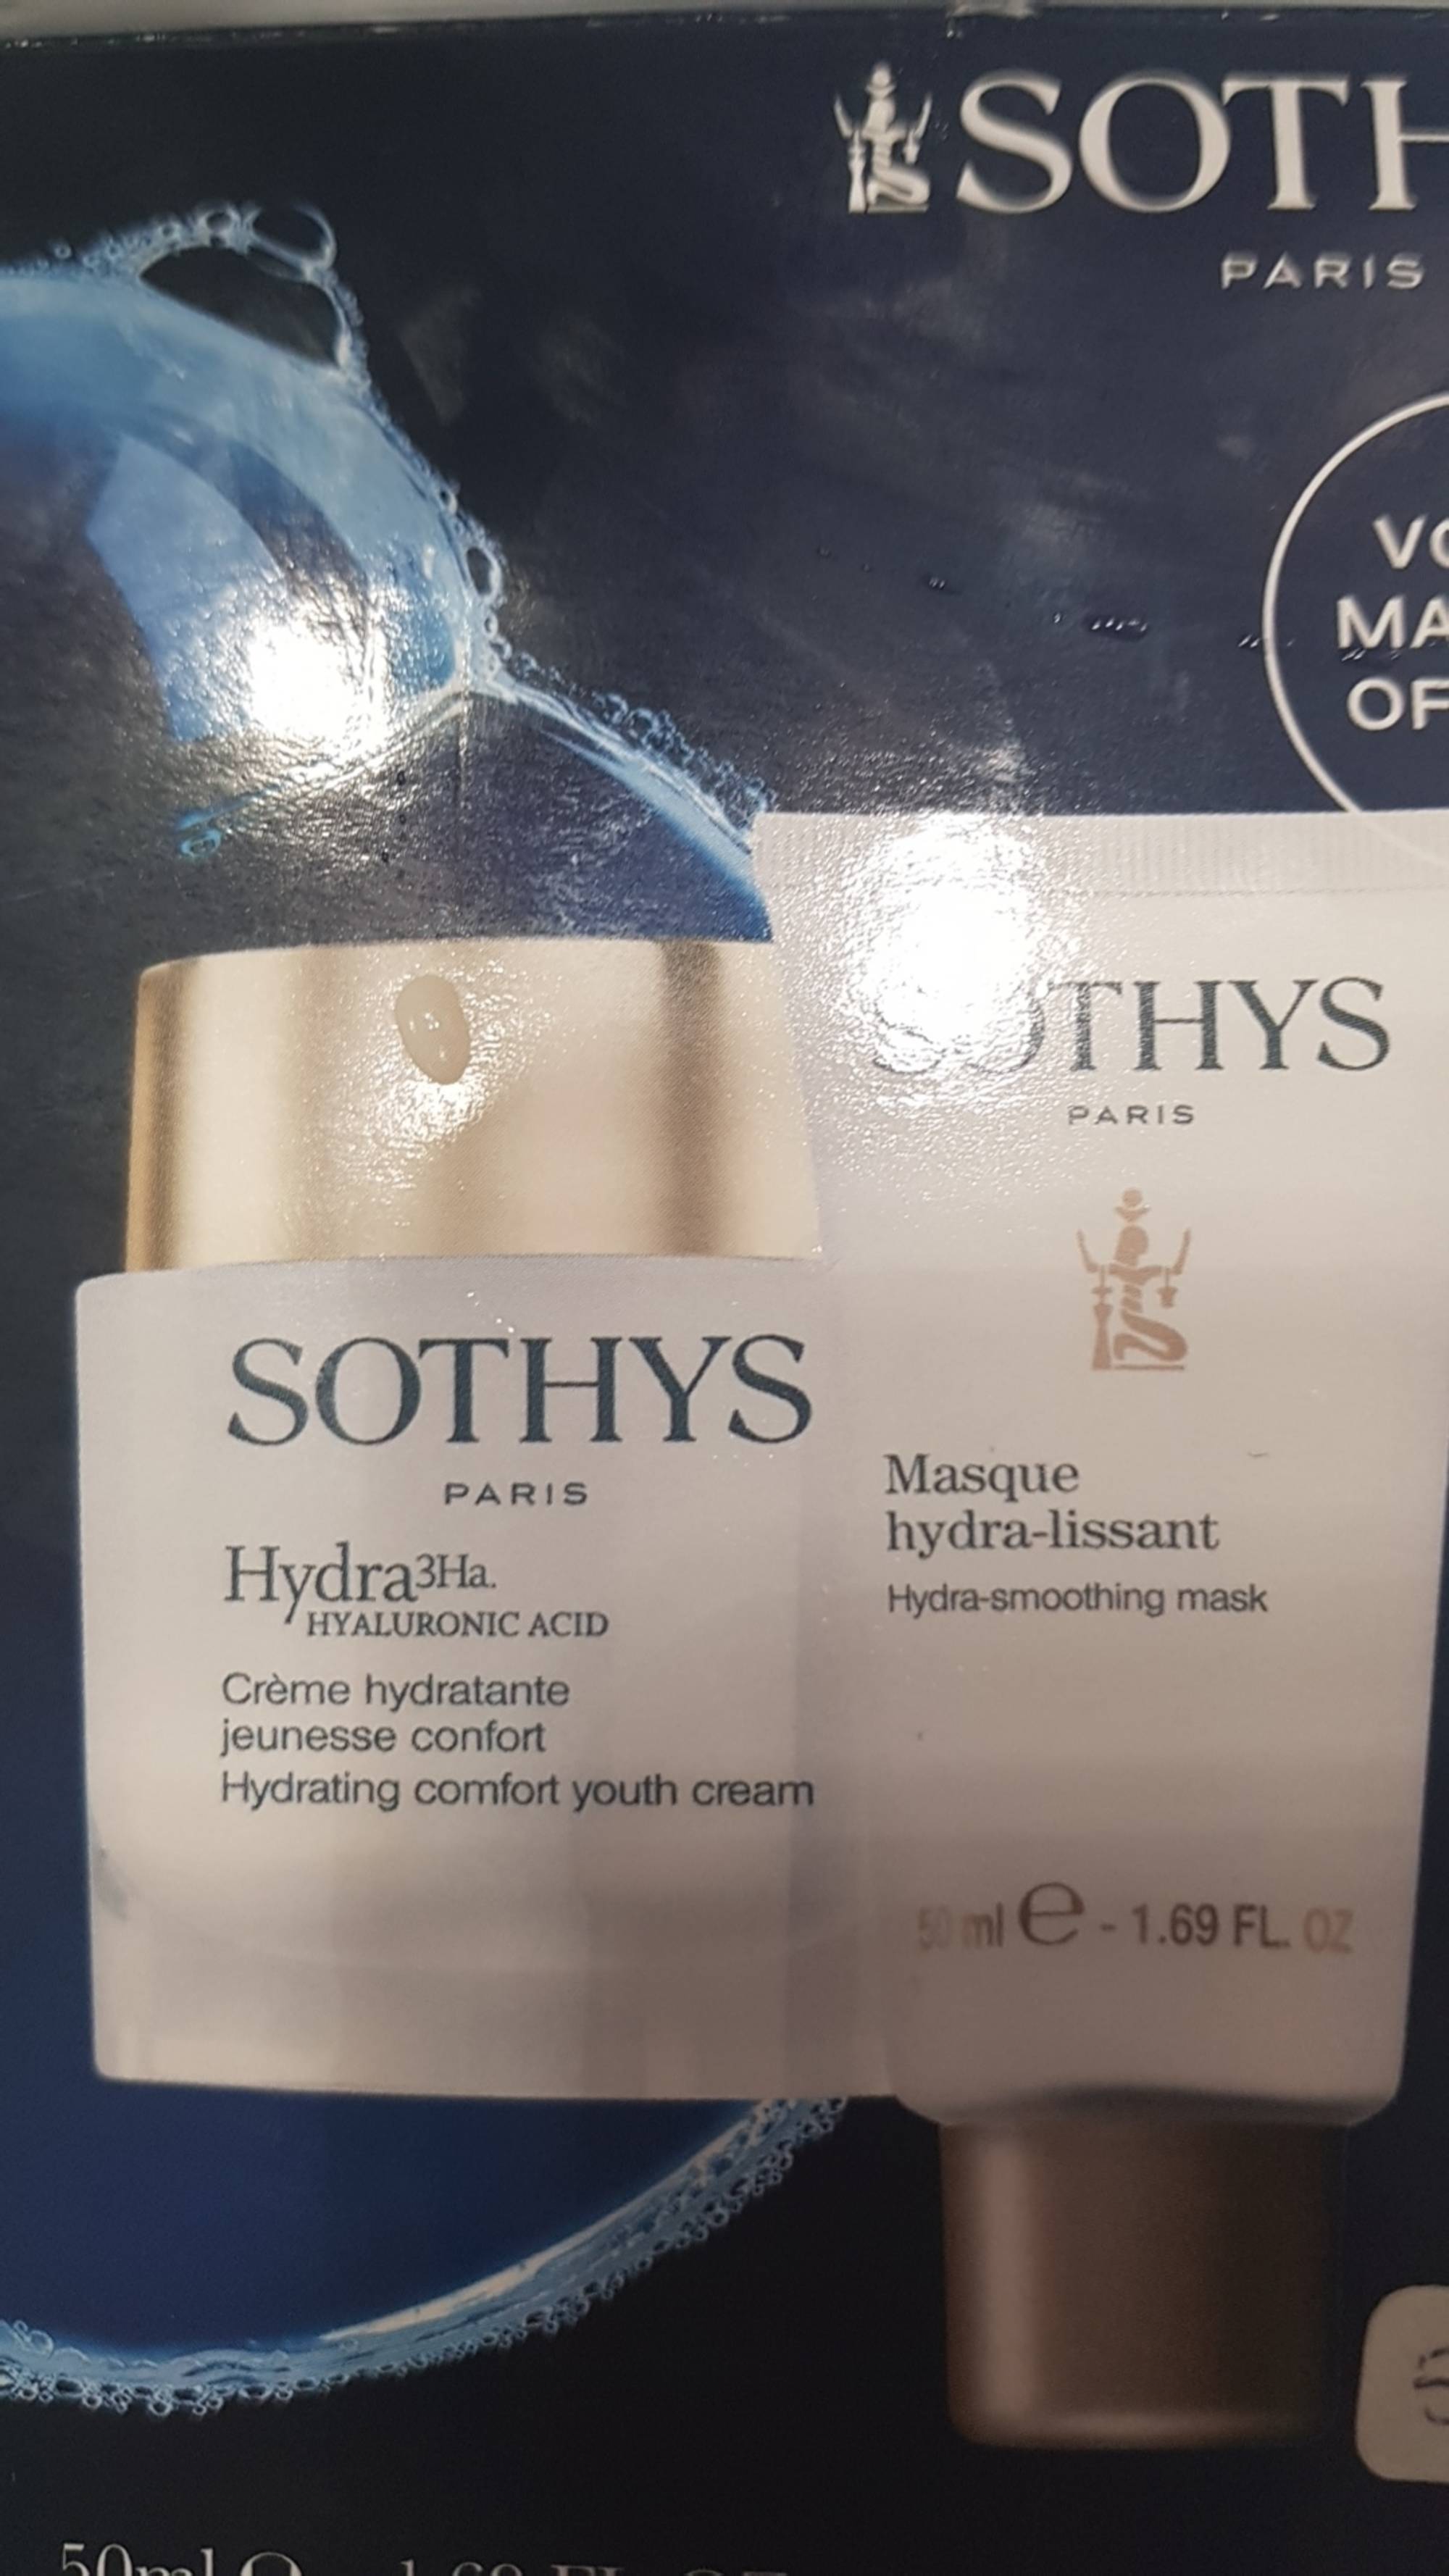 SOTHYS - Hydra hyaluronic acid - Crème hydratante jeunesse